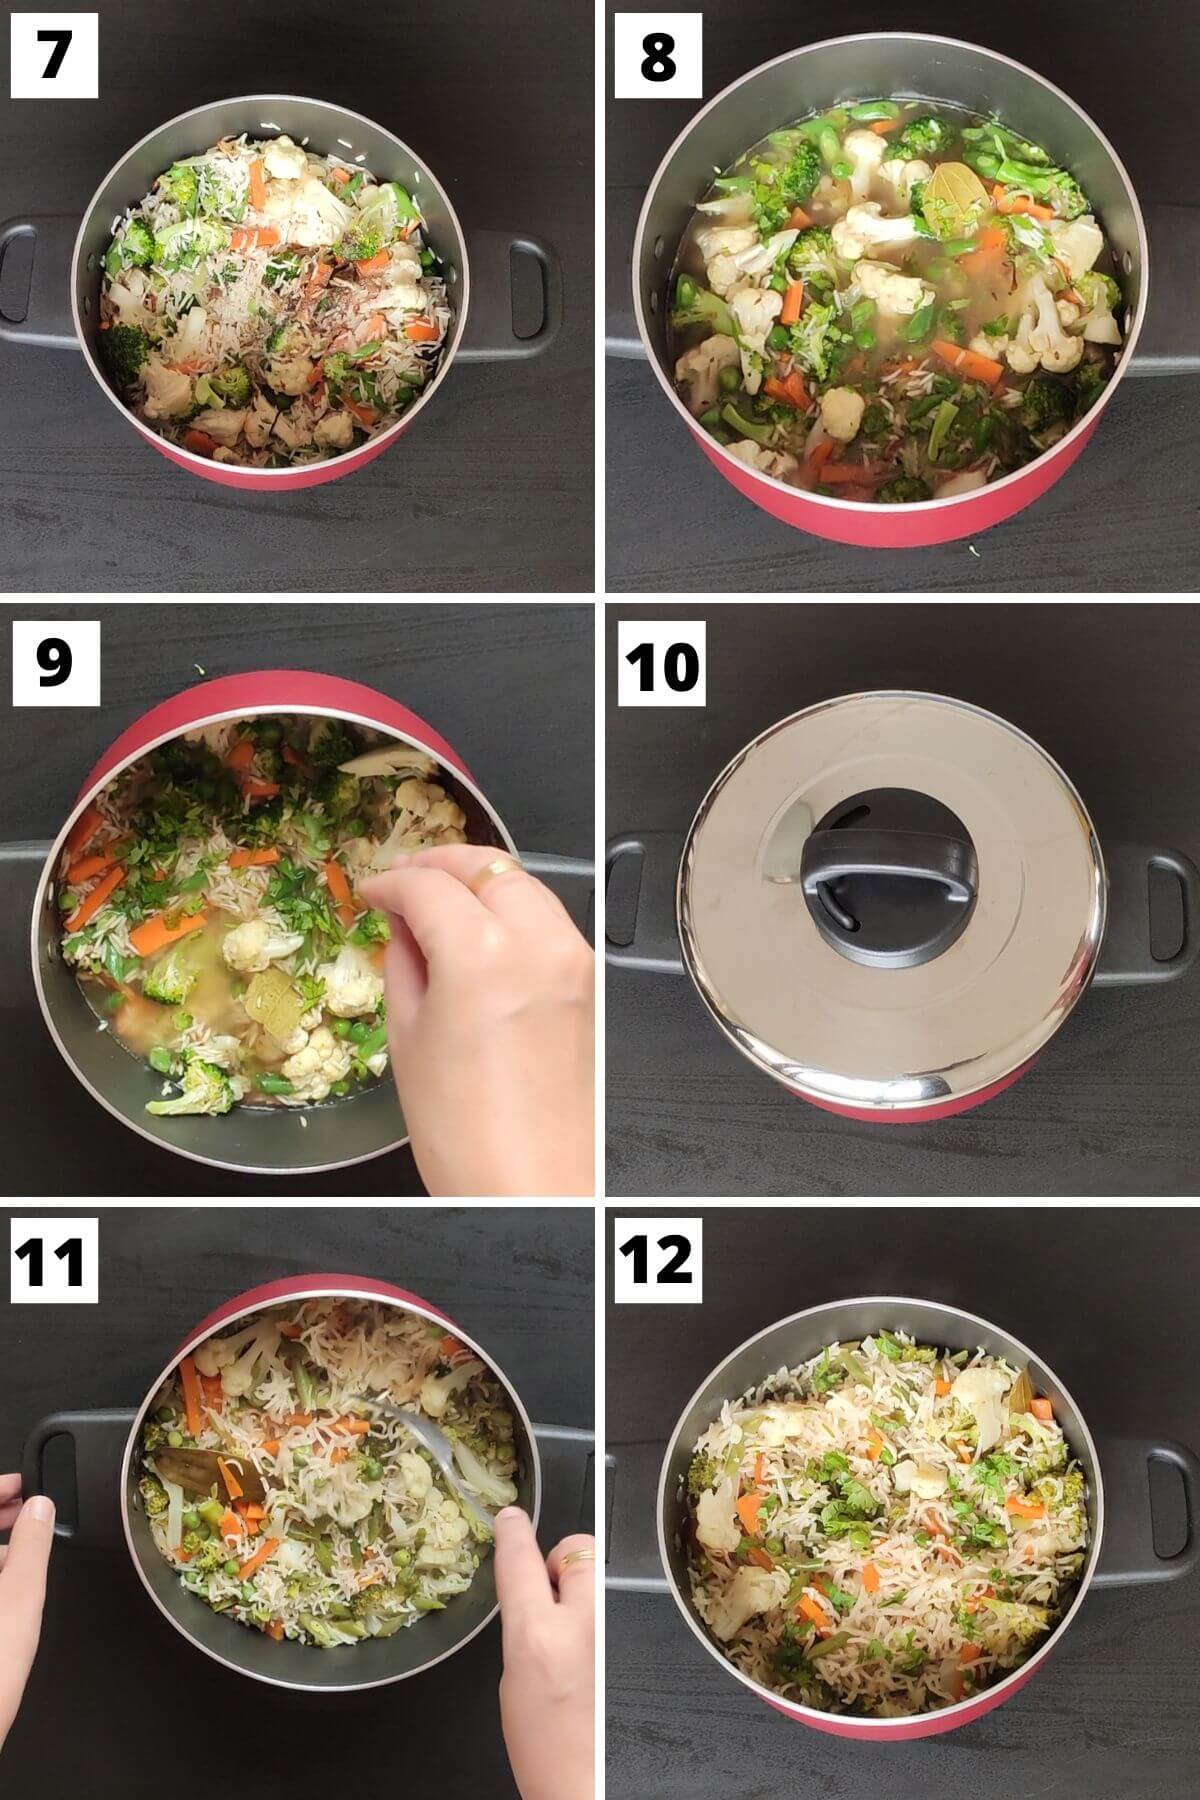 Steps to make vegetable rice